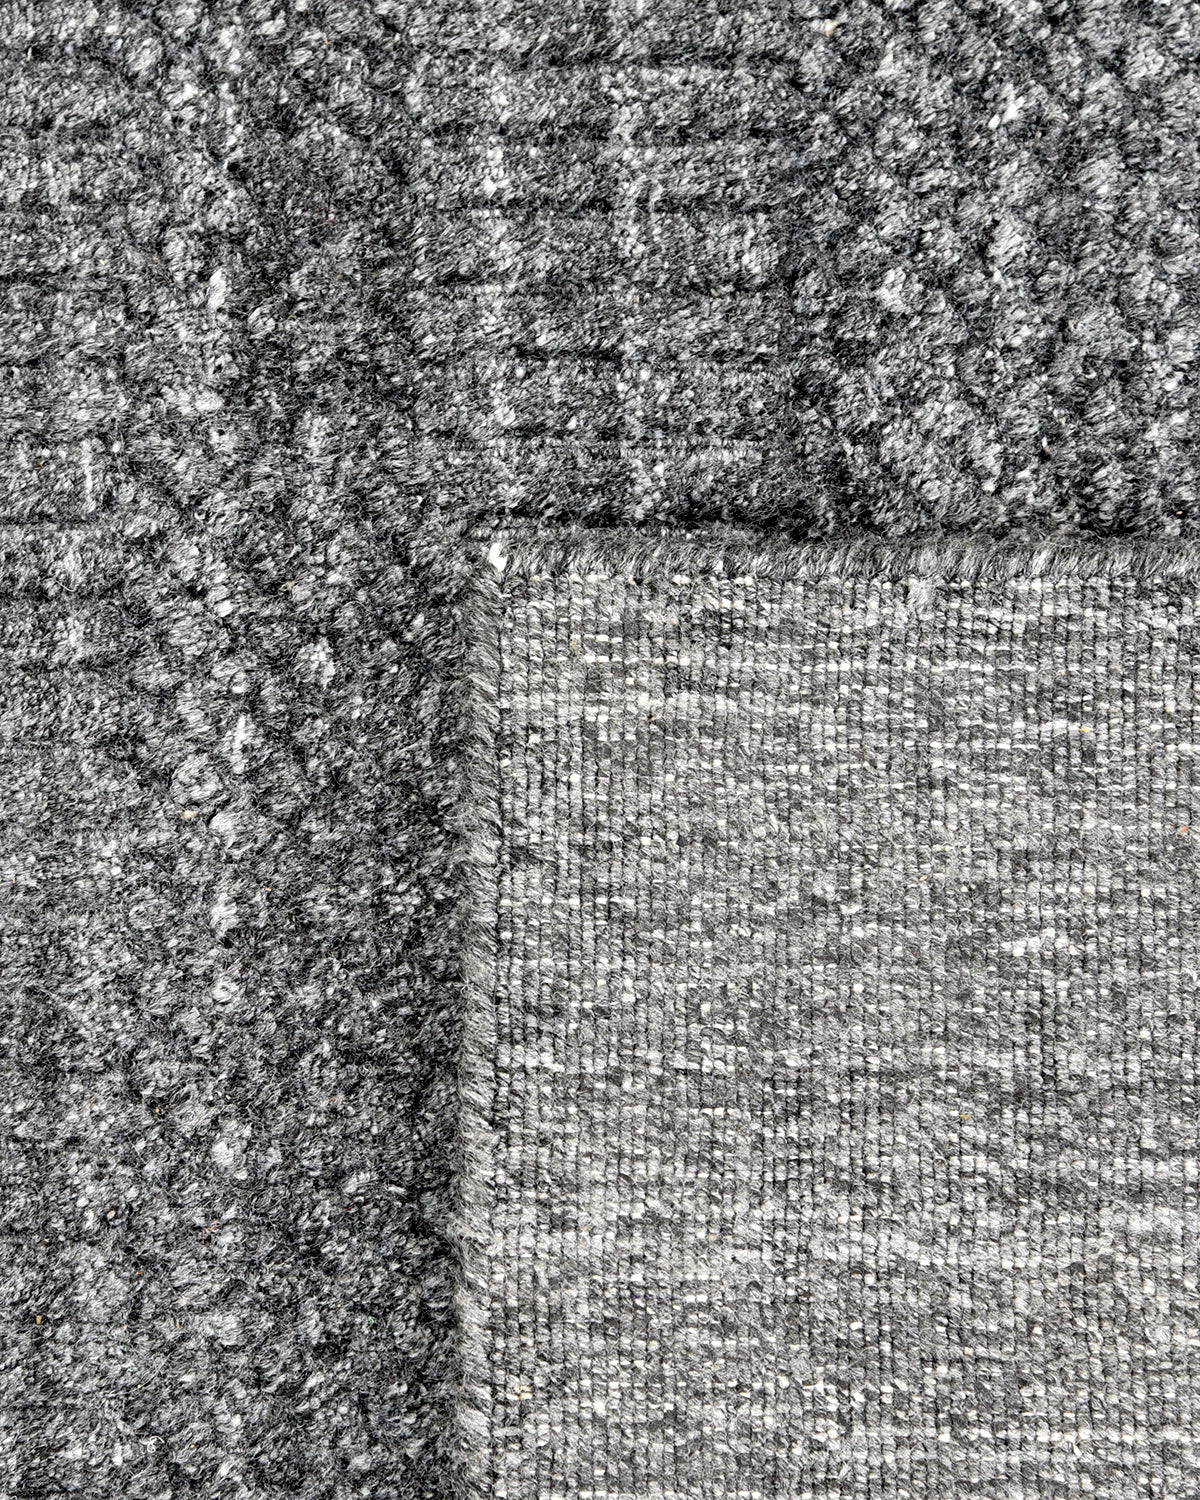 Sanam Handmade Contemporary Striped Dark Gray Area Rug